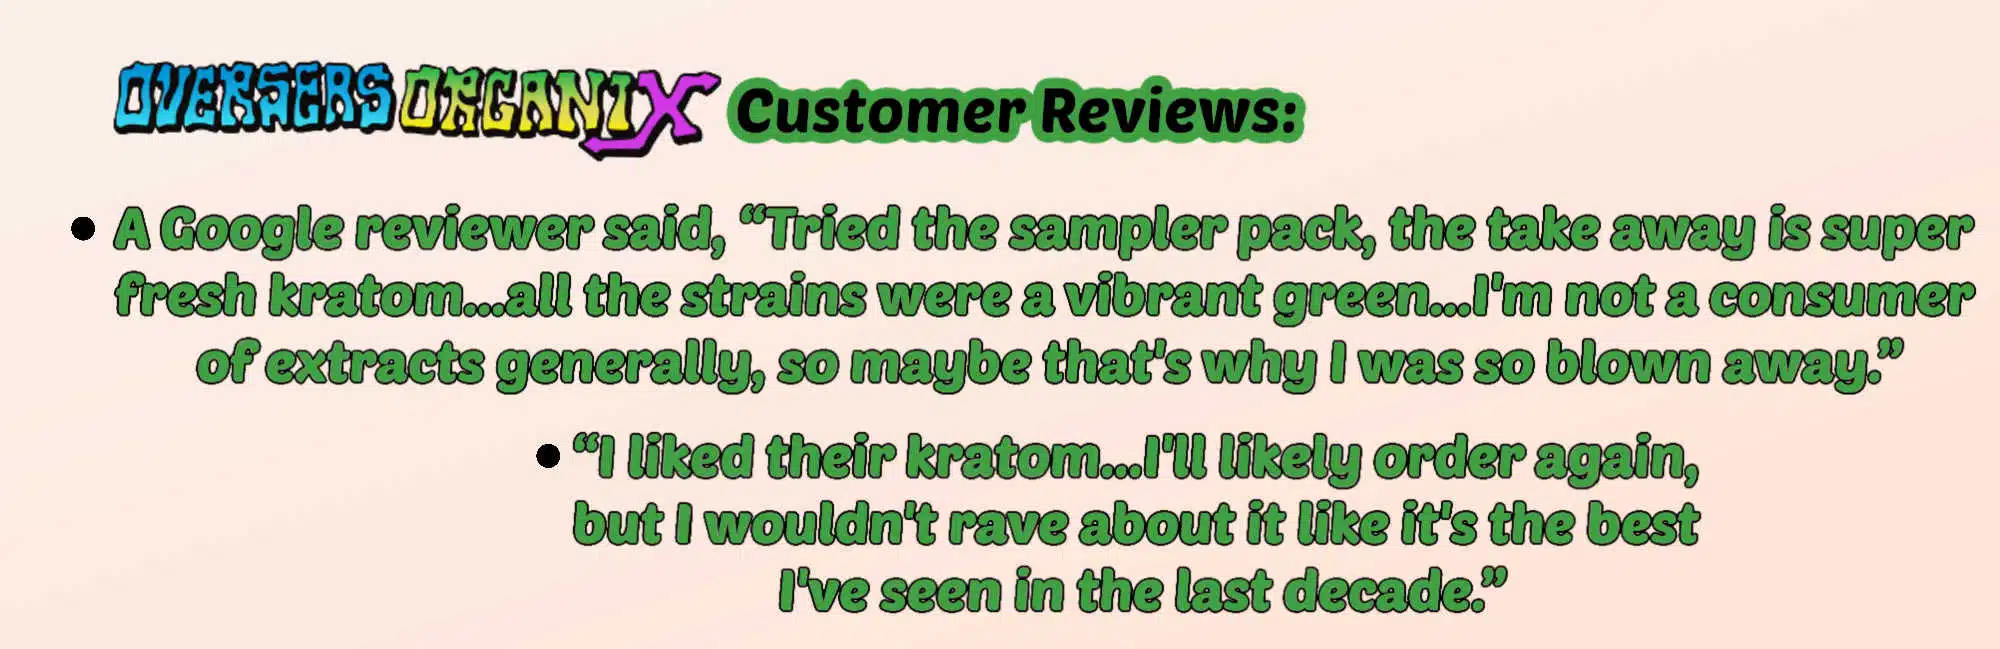 image of overseas organix customer reviews